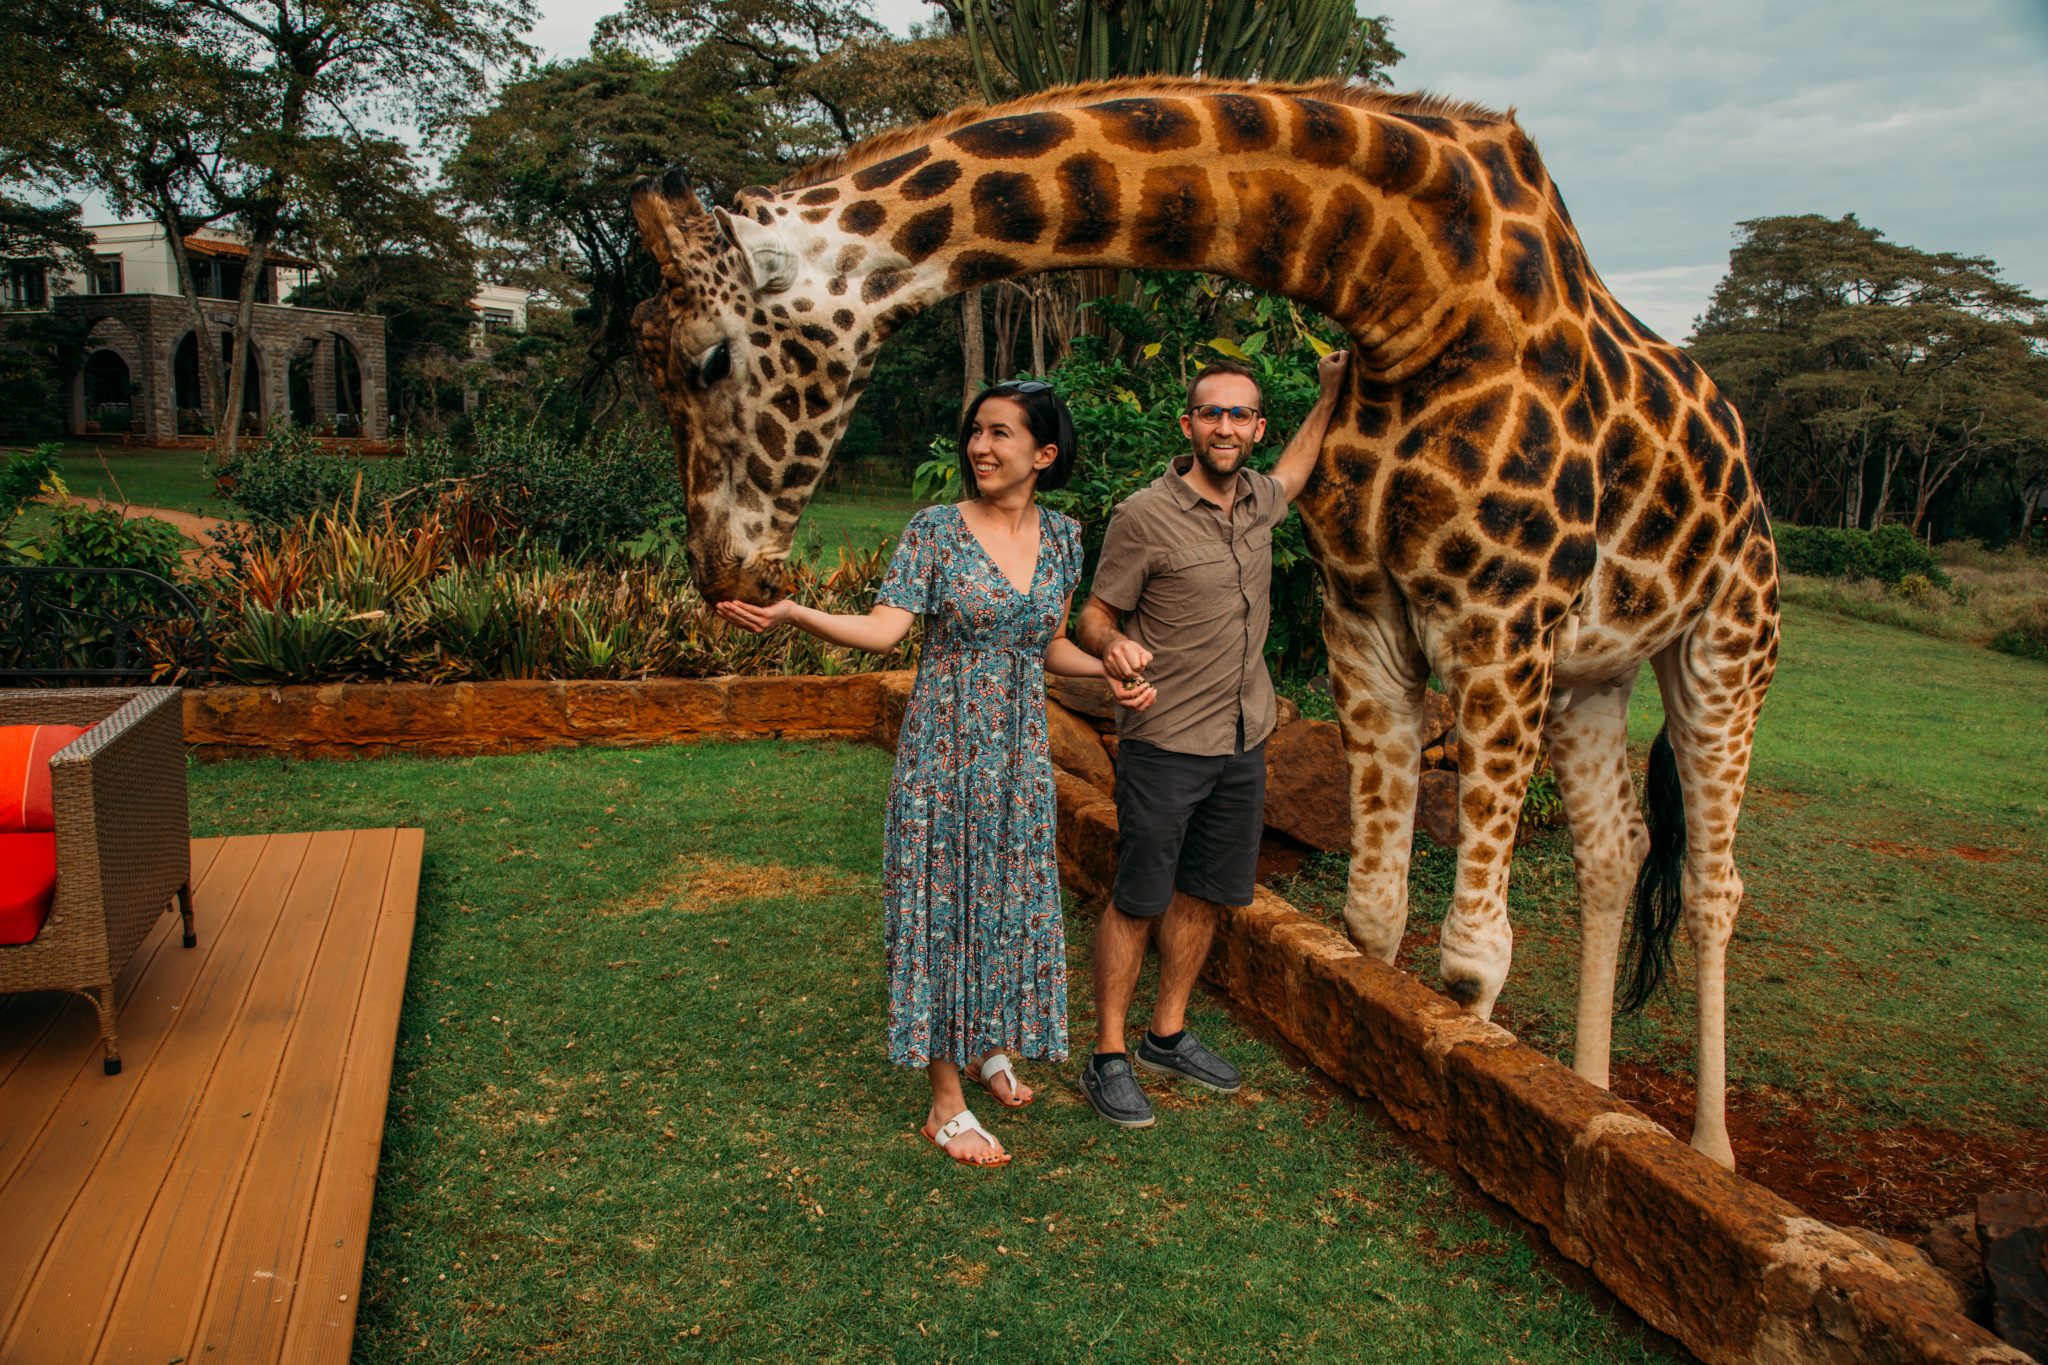 A man and woman standing next to a giraffe.